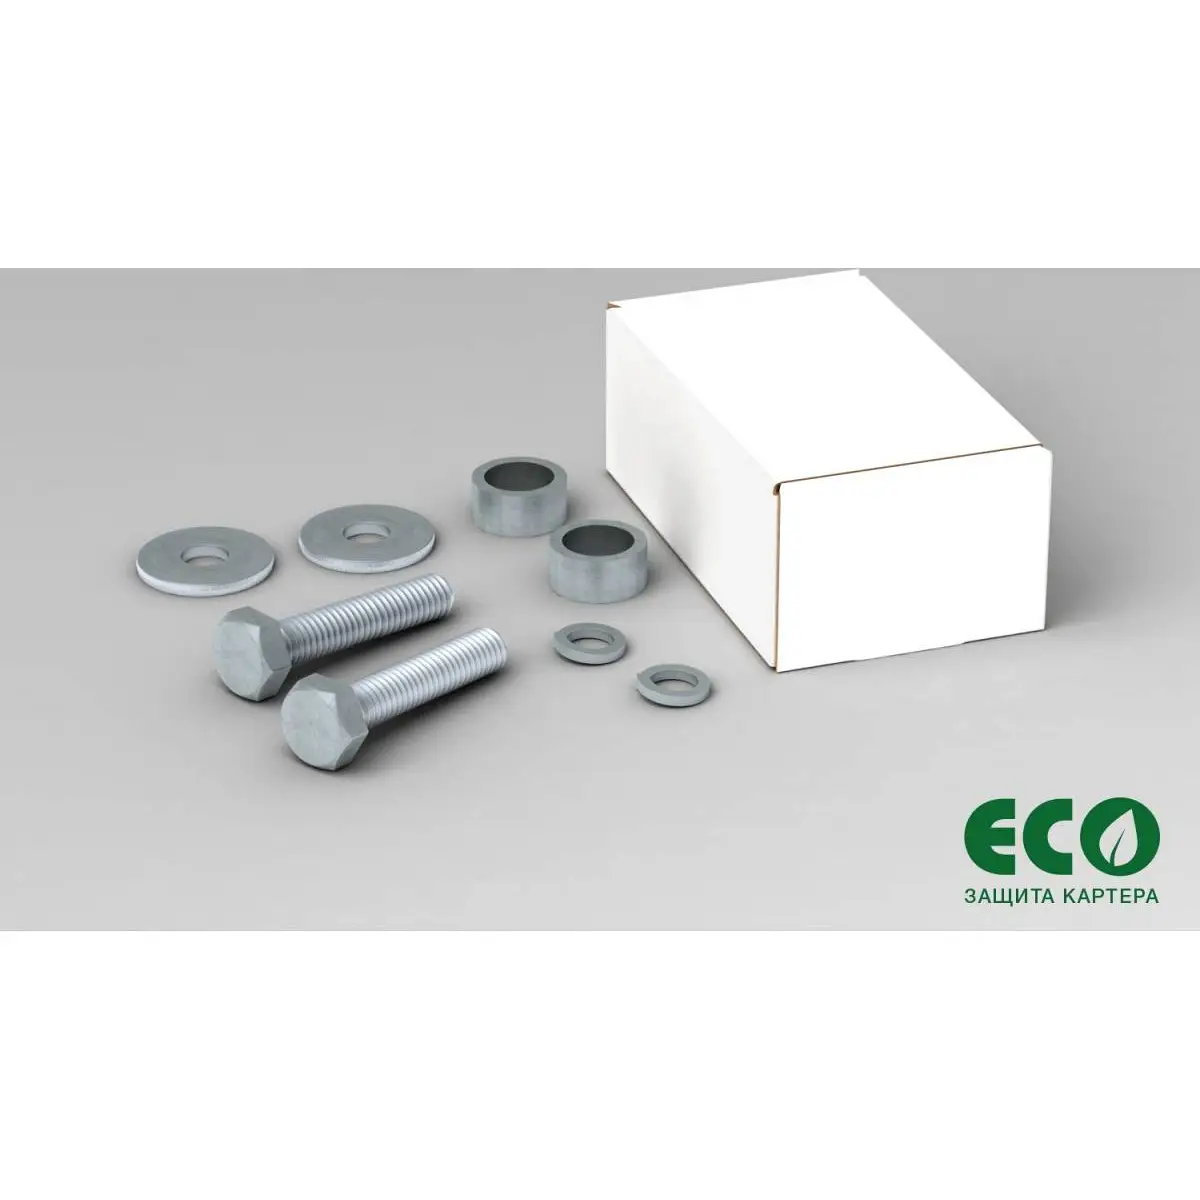 Комплект защиты картера и крепеж Eco eco5220020 6JD3KW MI PMC 1437099103 изображение 3